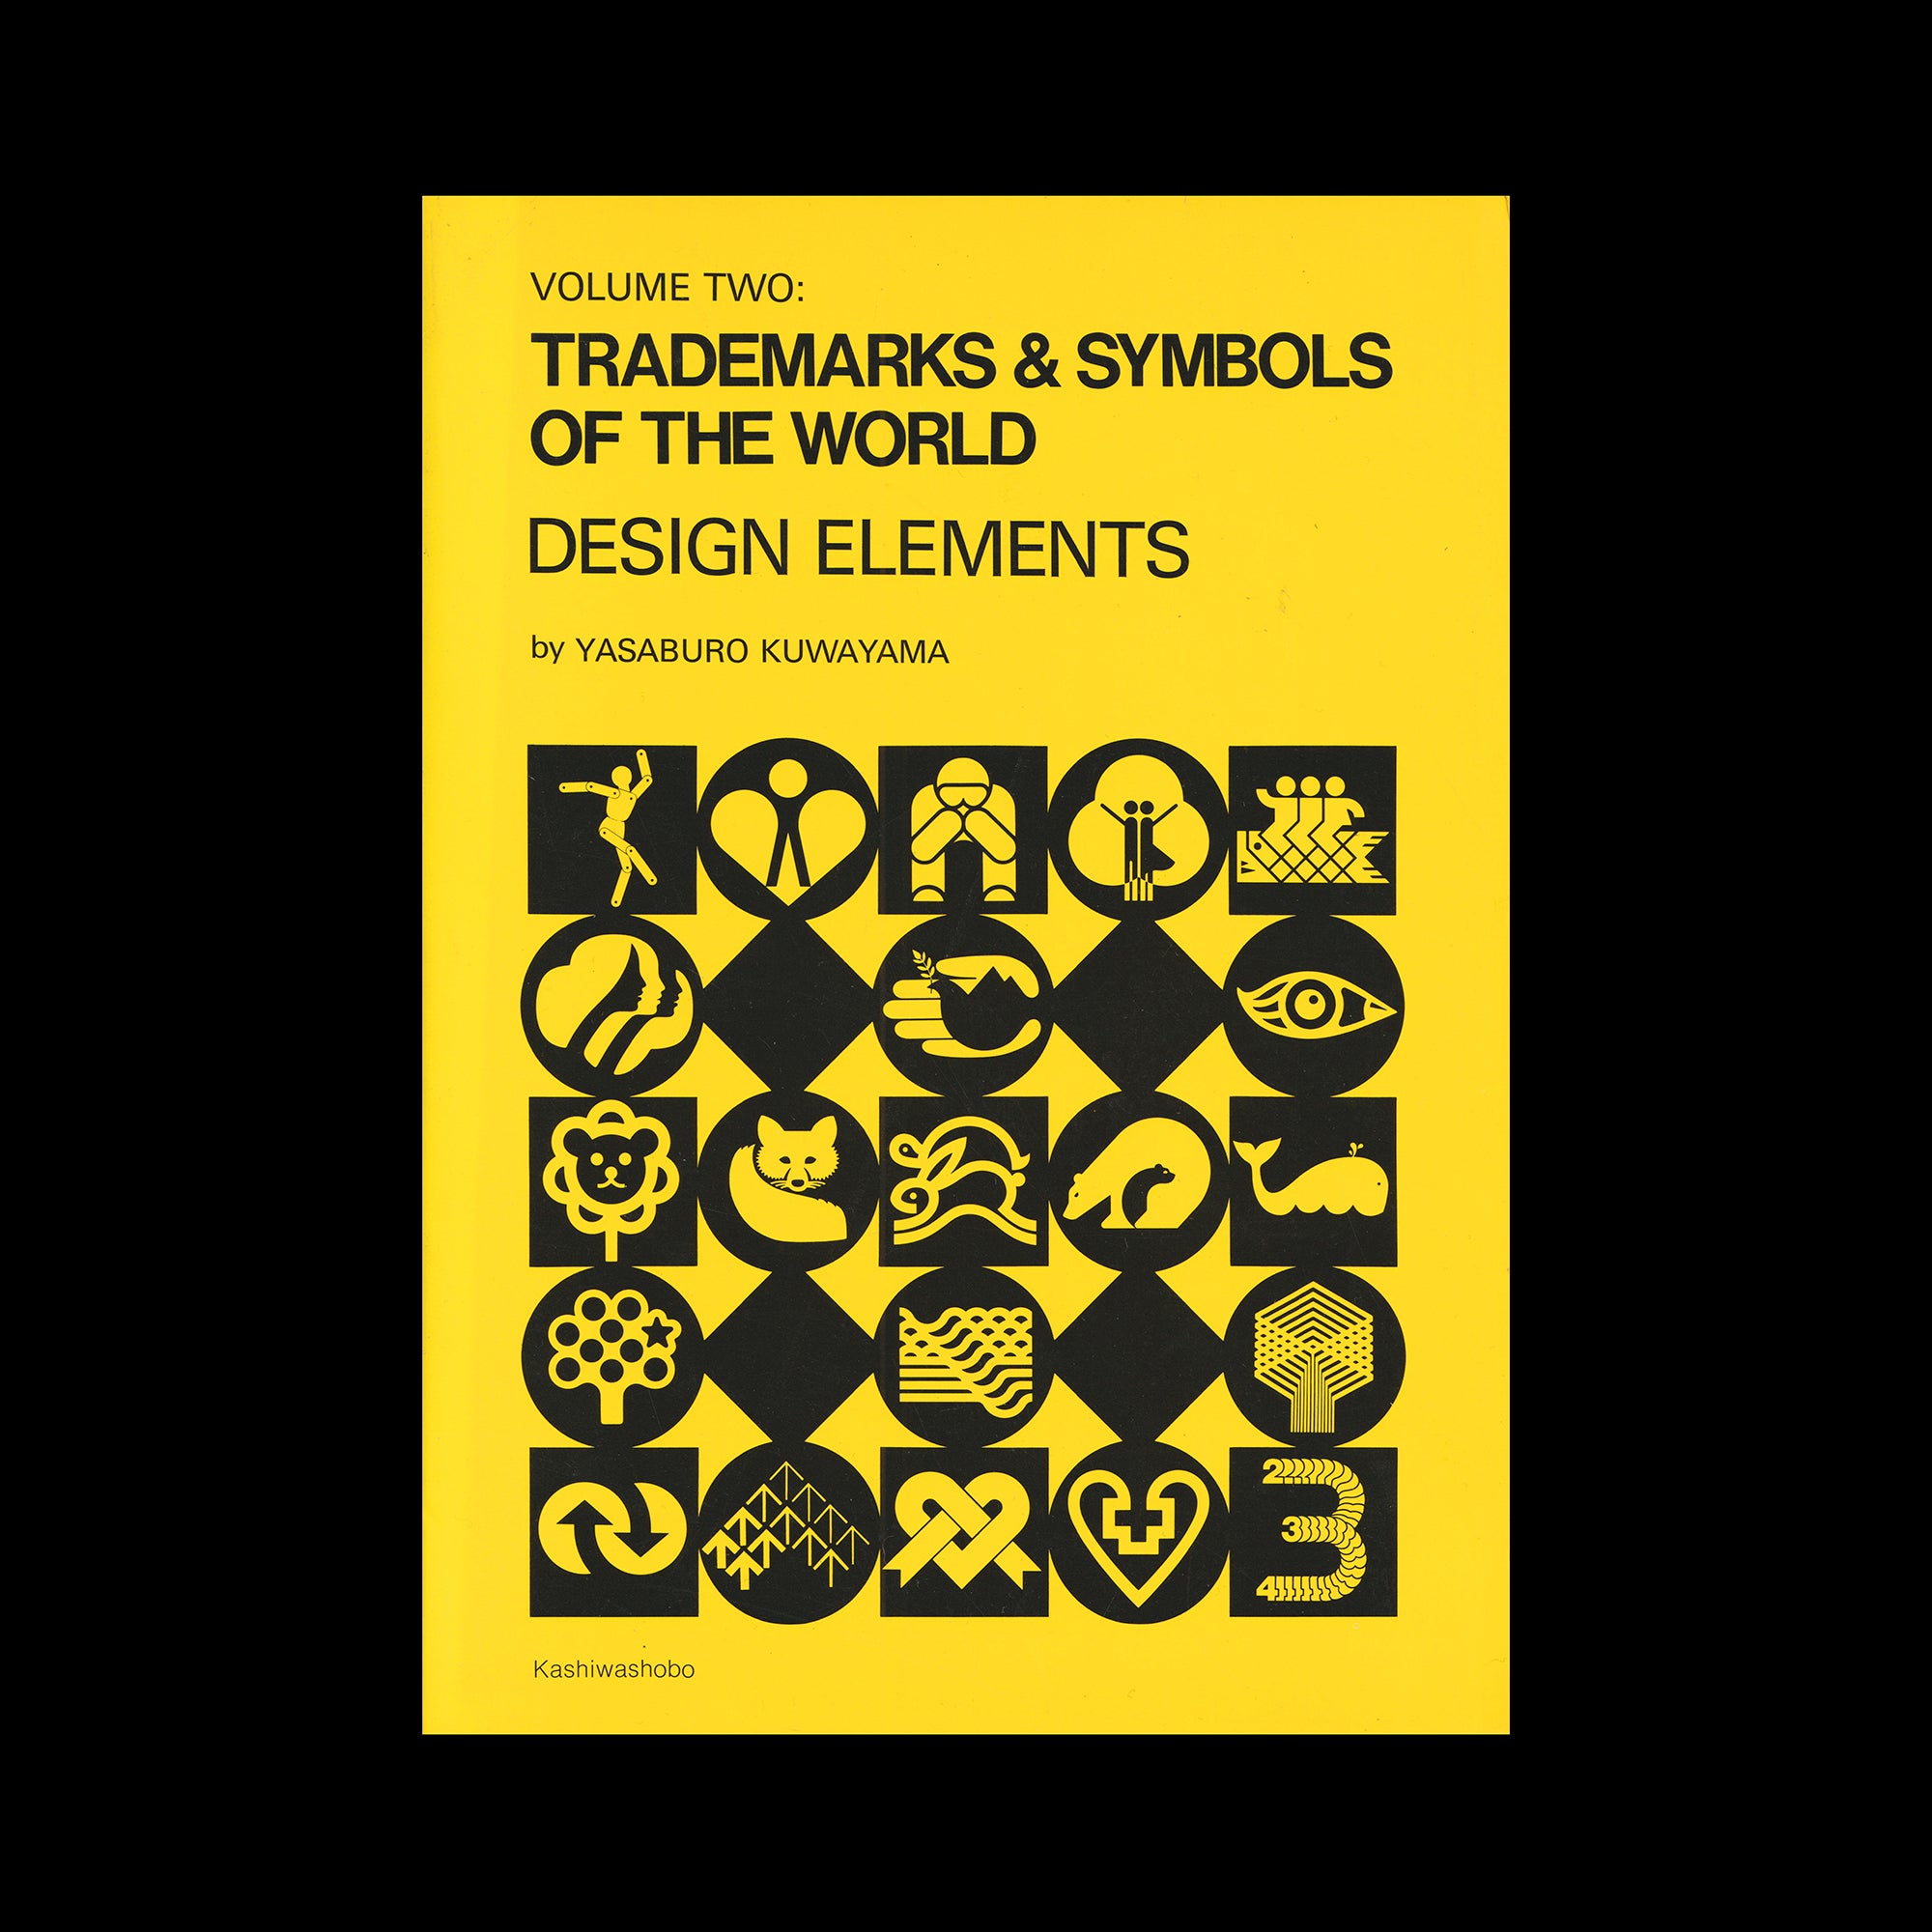 Trademarks & Symbols of the World, 1989 (Complete Set)